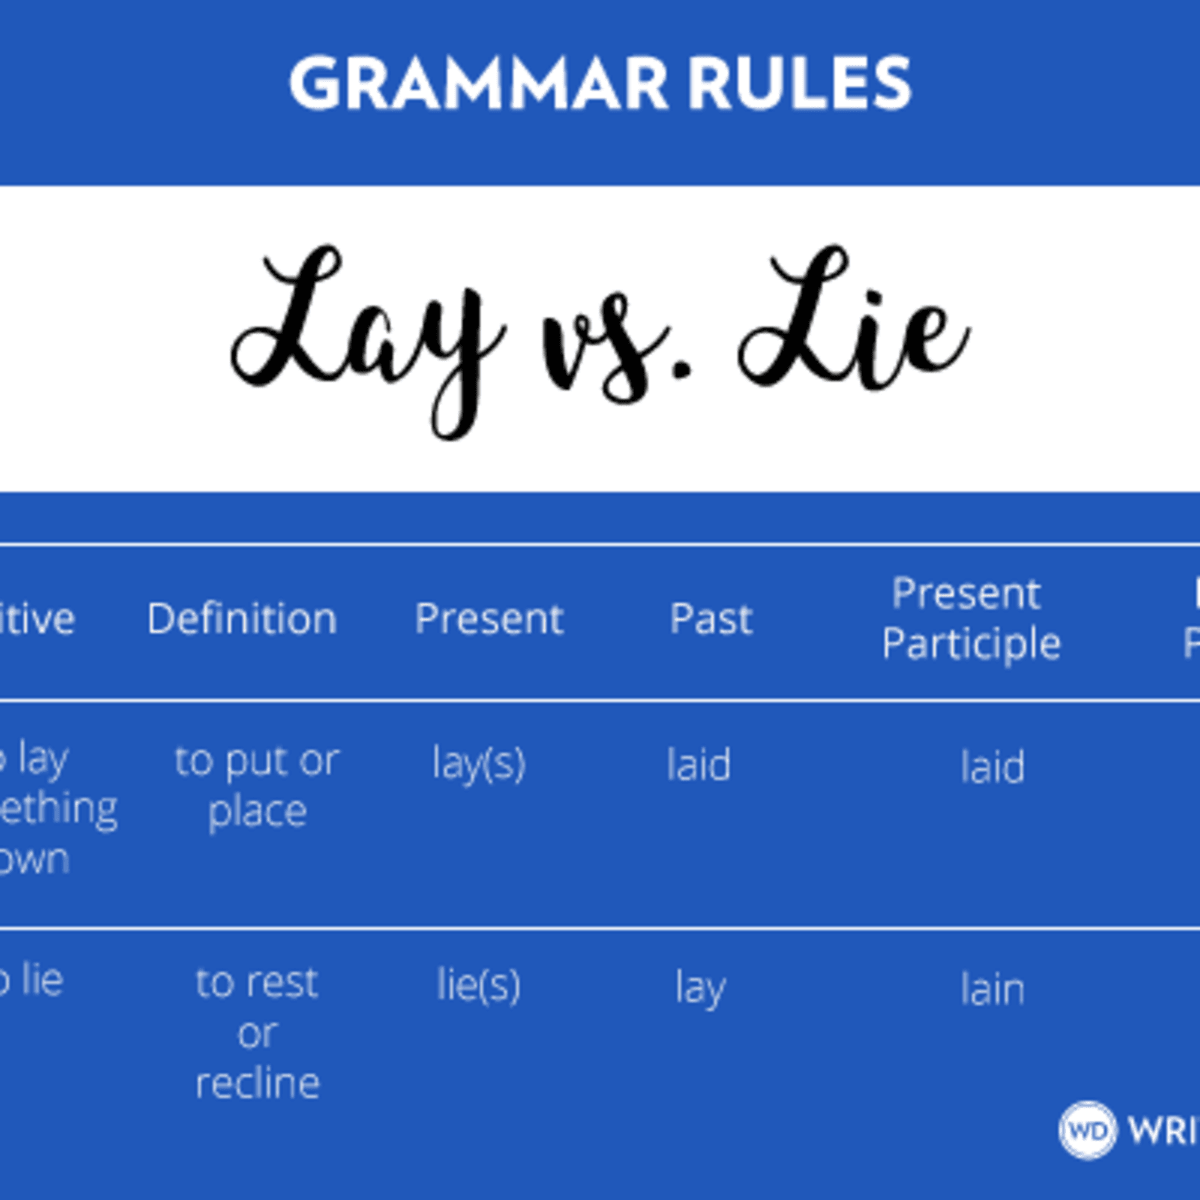 Lay Vs Lie Vs Laid Vs Lain Grammar Rules Writer S Digest